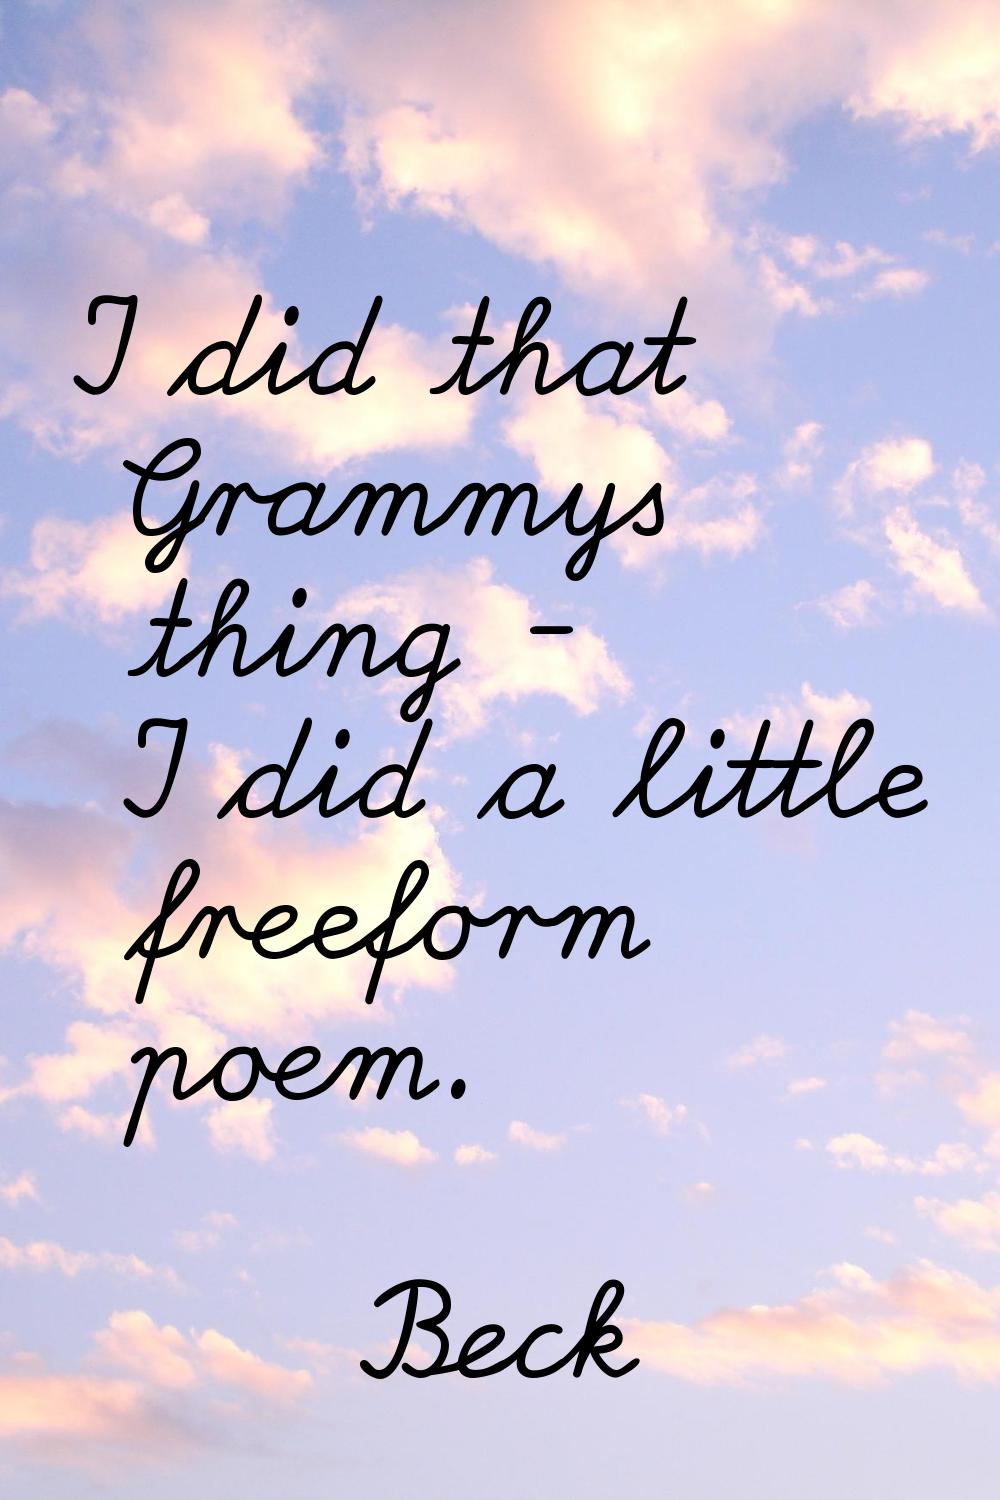 I did that Grammys thing - I did a little freeform poem.